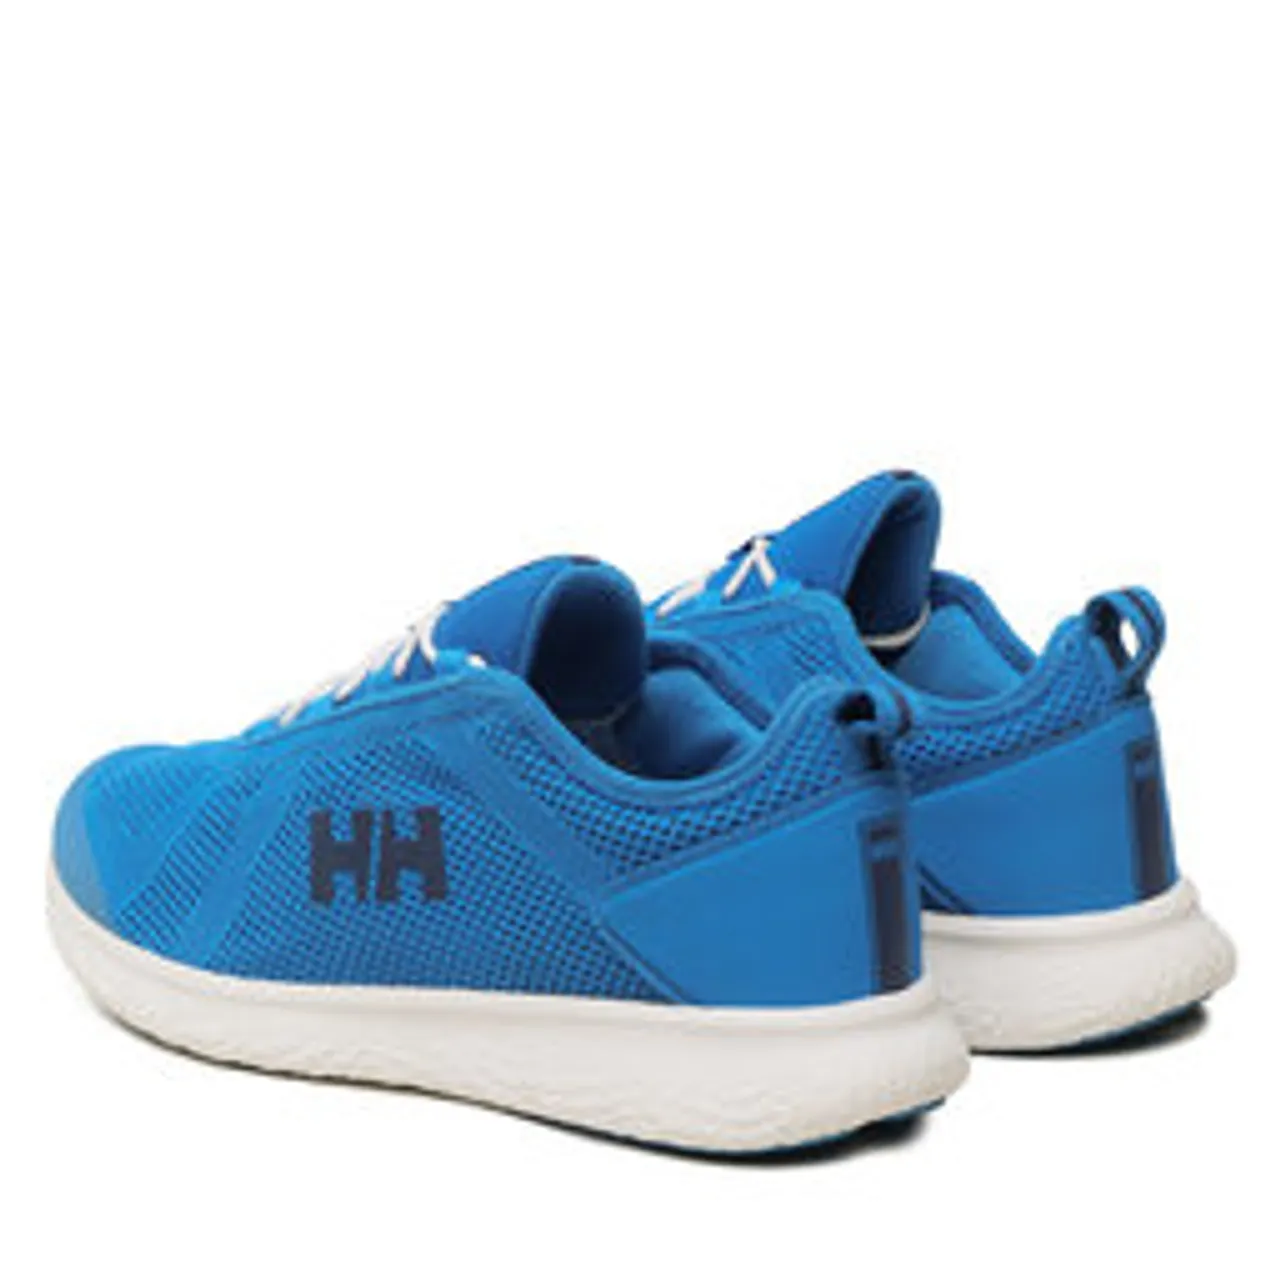 Schuhe Helly Hansen Supalight Medley 11845_639 Electric Blue/Off White